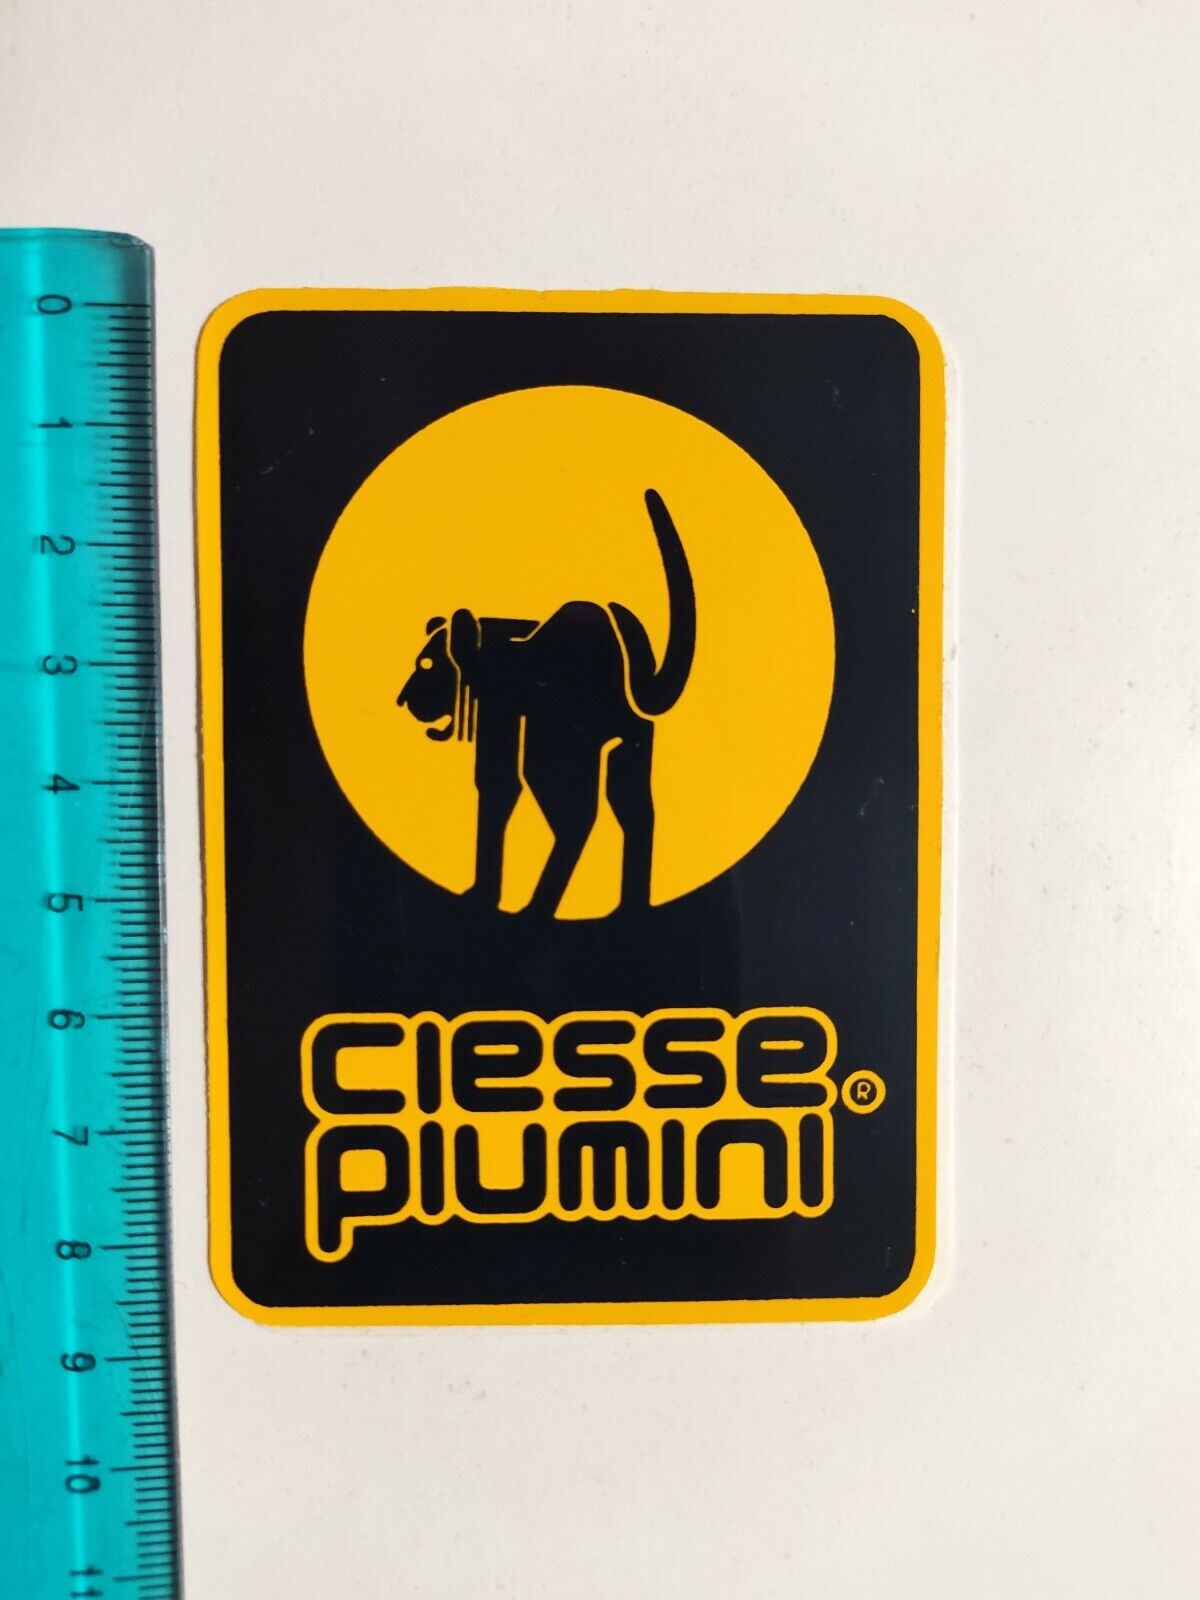 Adhesive Ciesse Quilts Sticker Autocollant Aufkleber 80s Original OEM